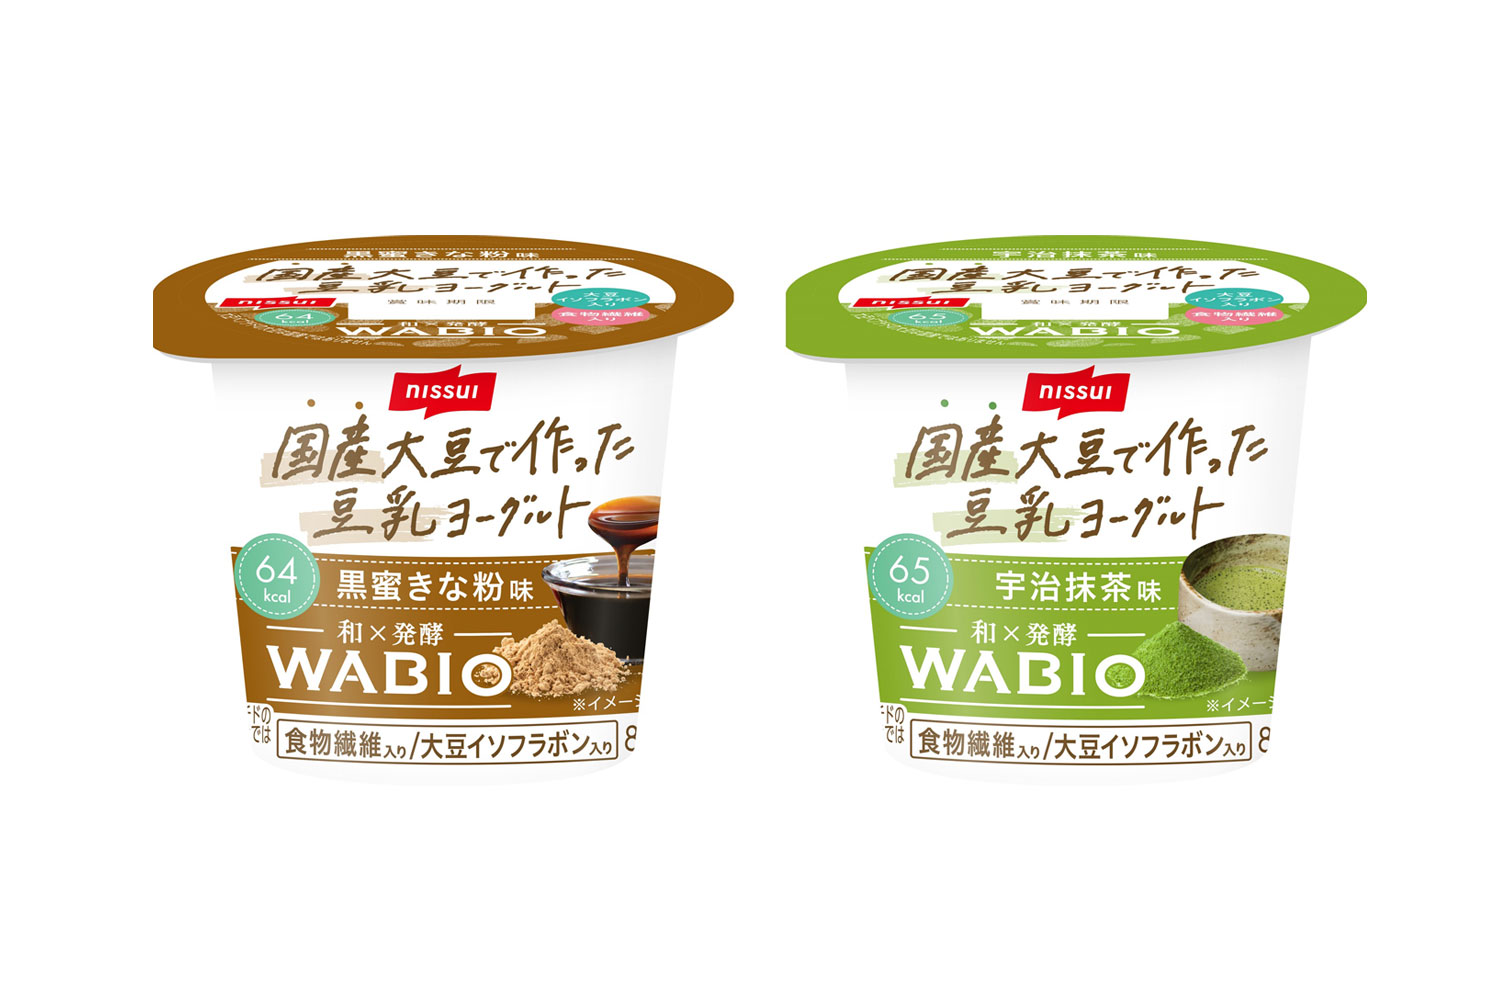 WABIO 国産大豆で作った豆乳ヨーグルト 黒蜜きな粉味・宇治抹茶味